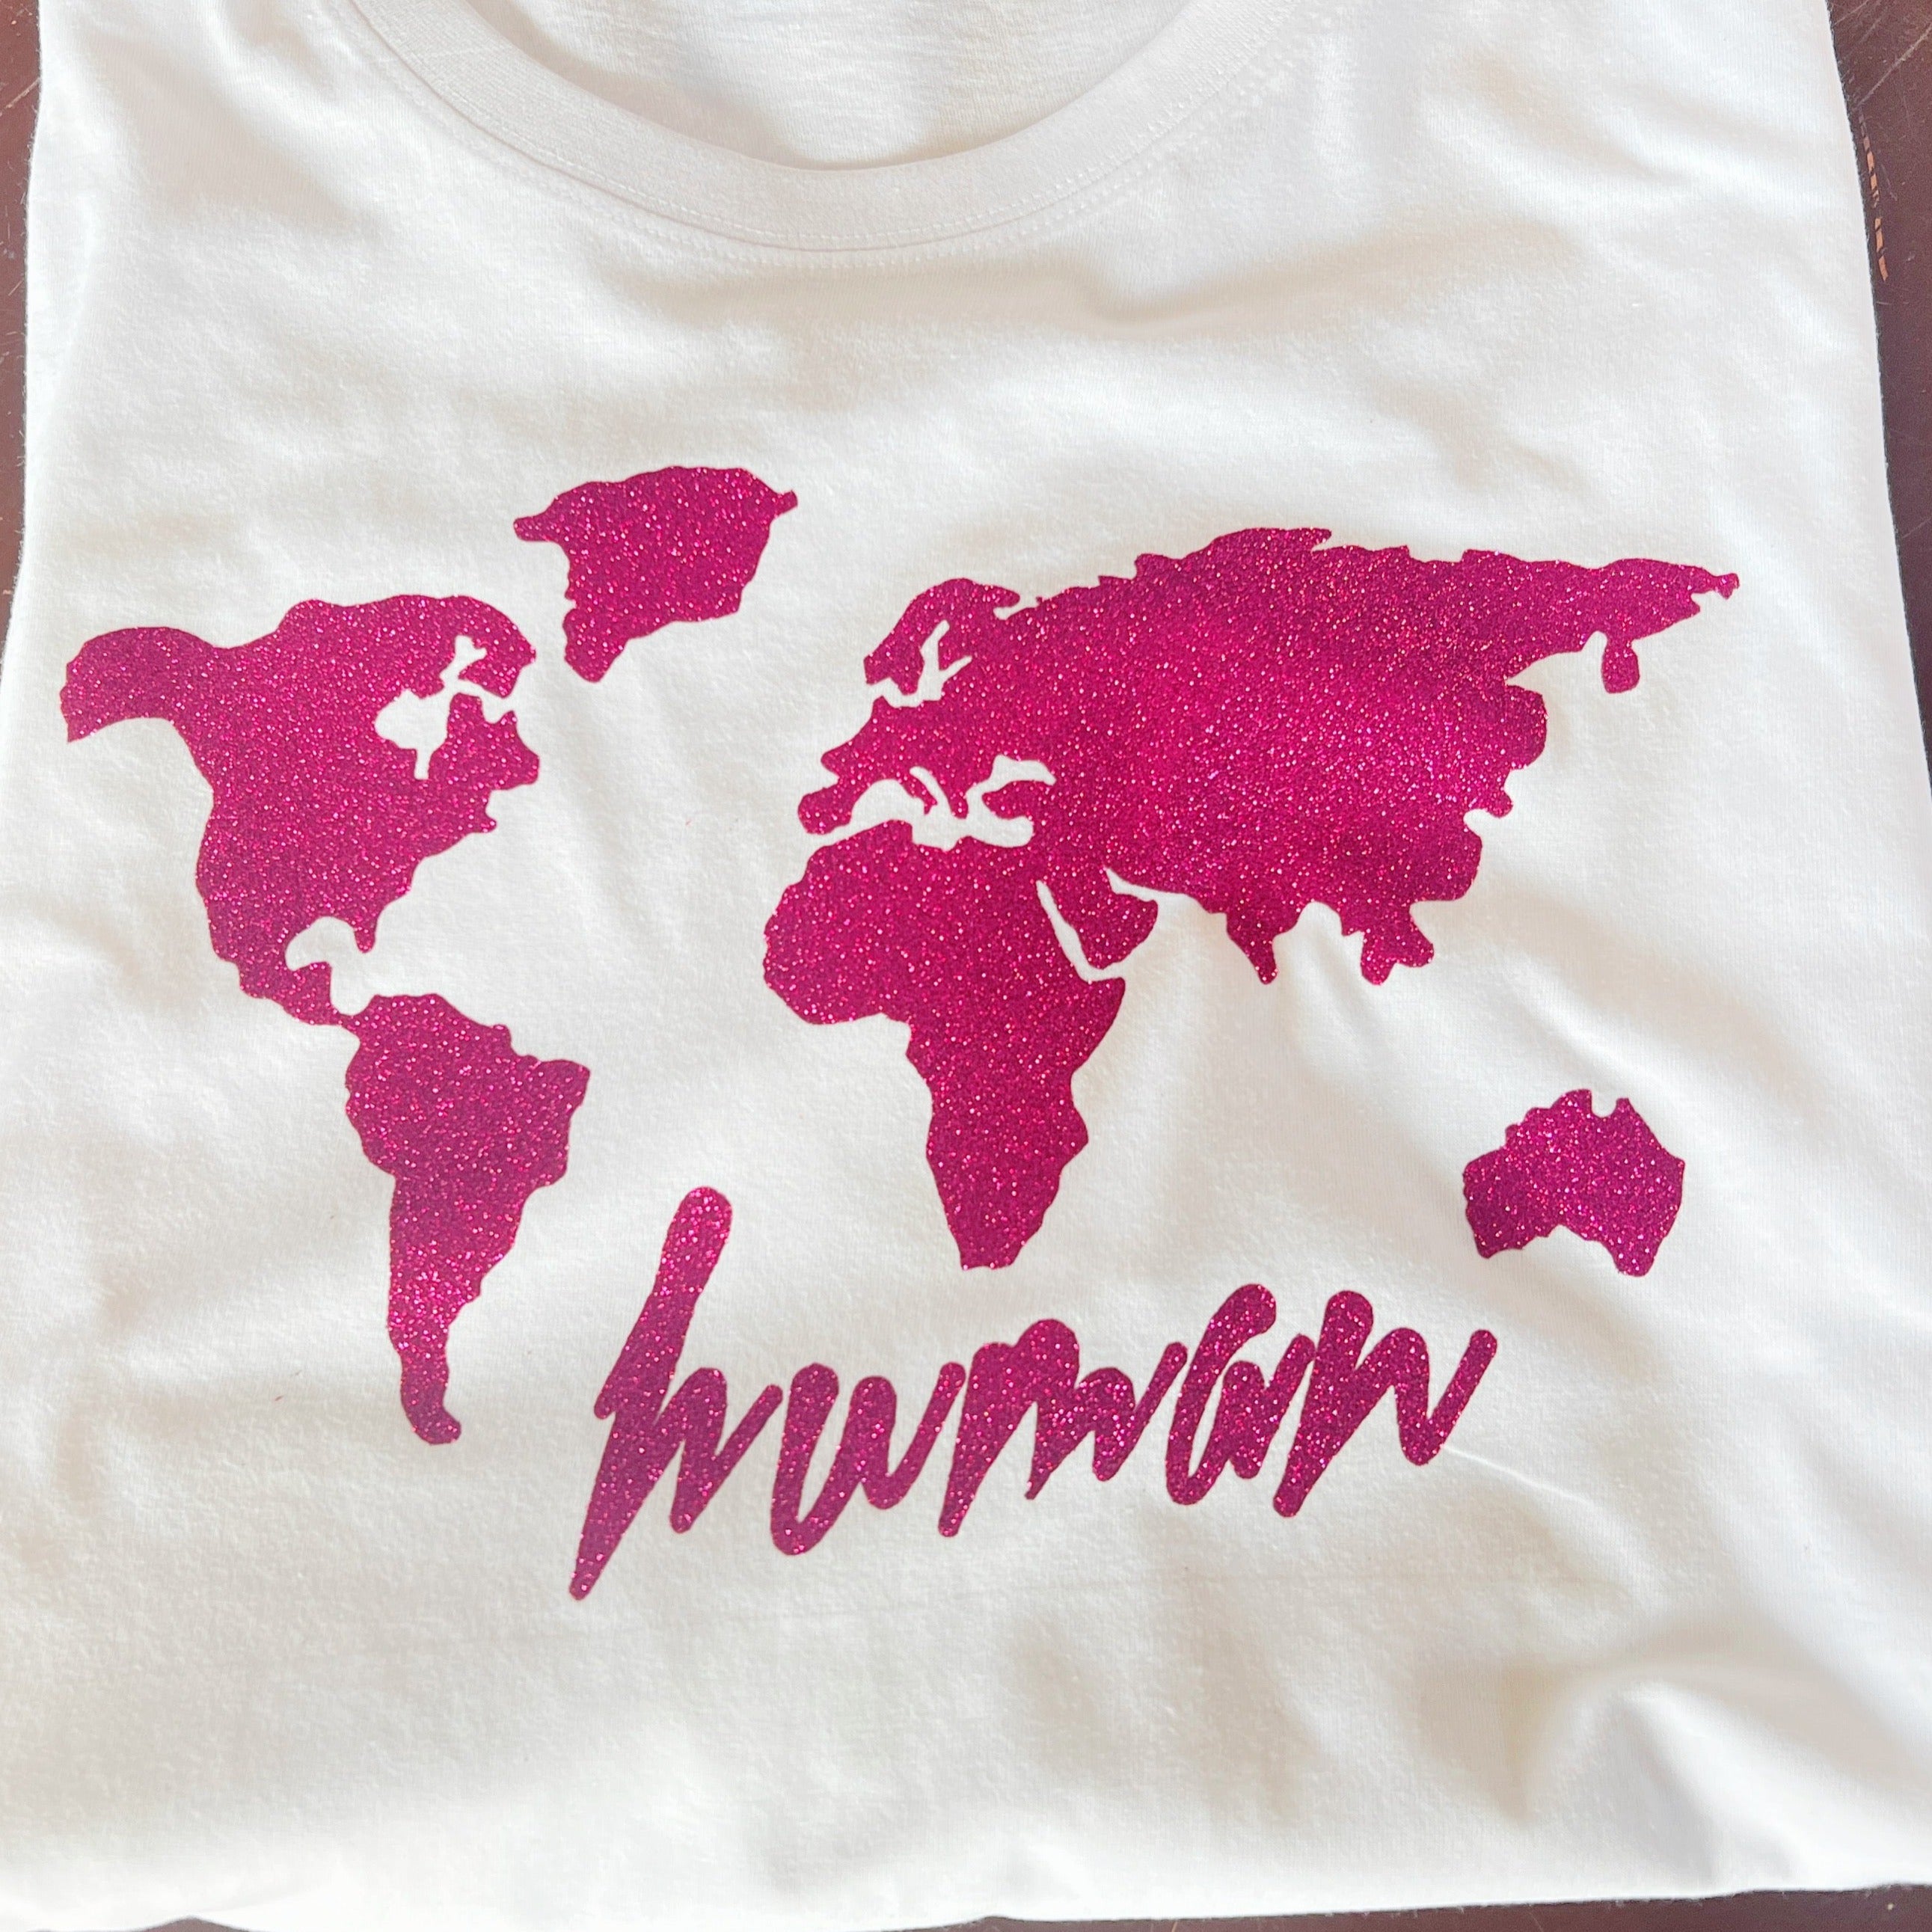 ZarahSkull Shirt white "world human “